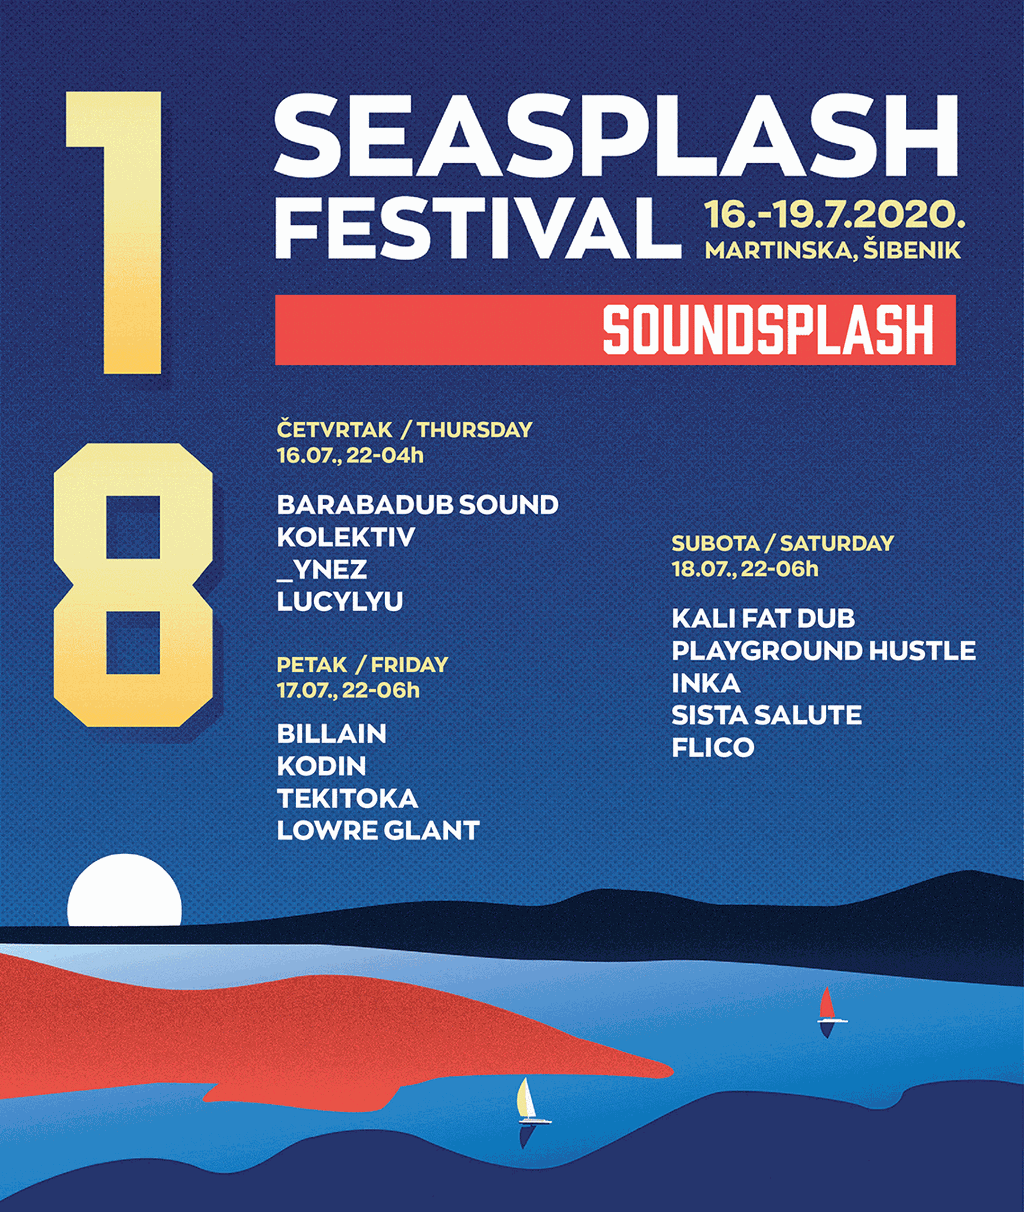 Seasplash festival - Soundsplash